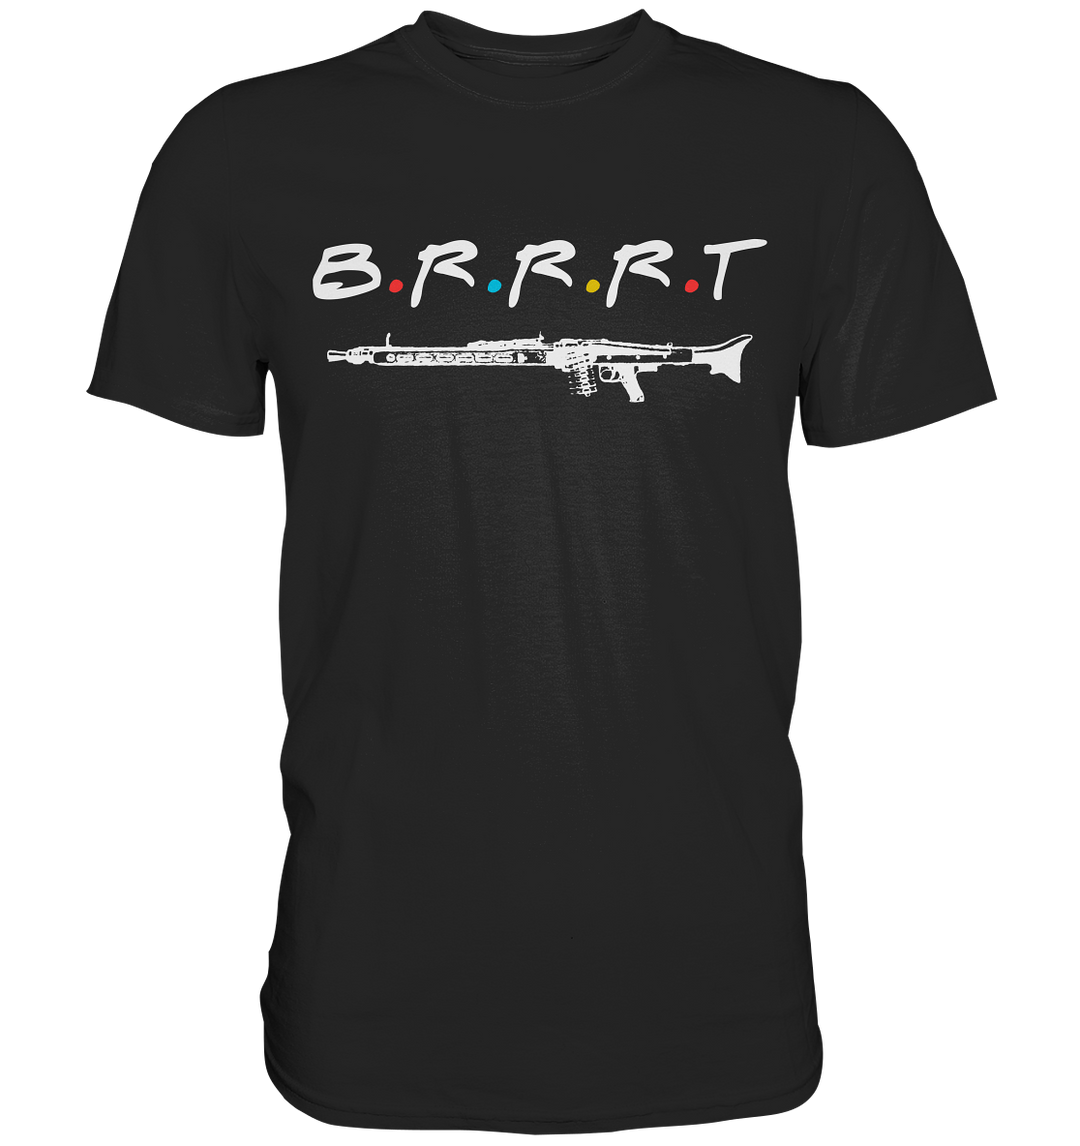 "B.R.R.R.T" - Premium Shirt